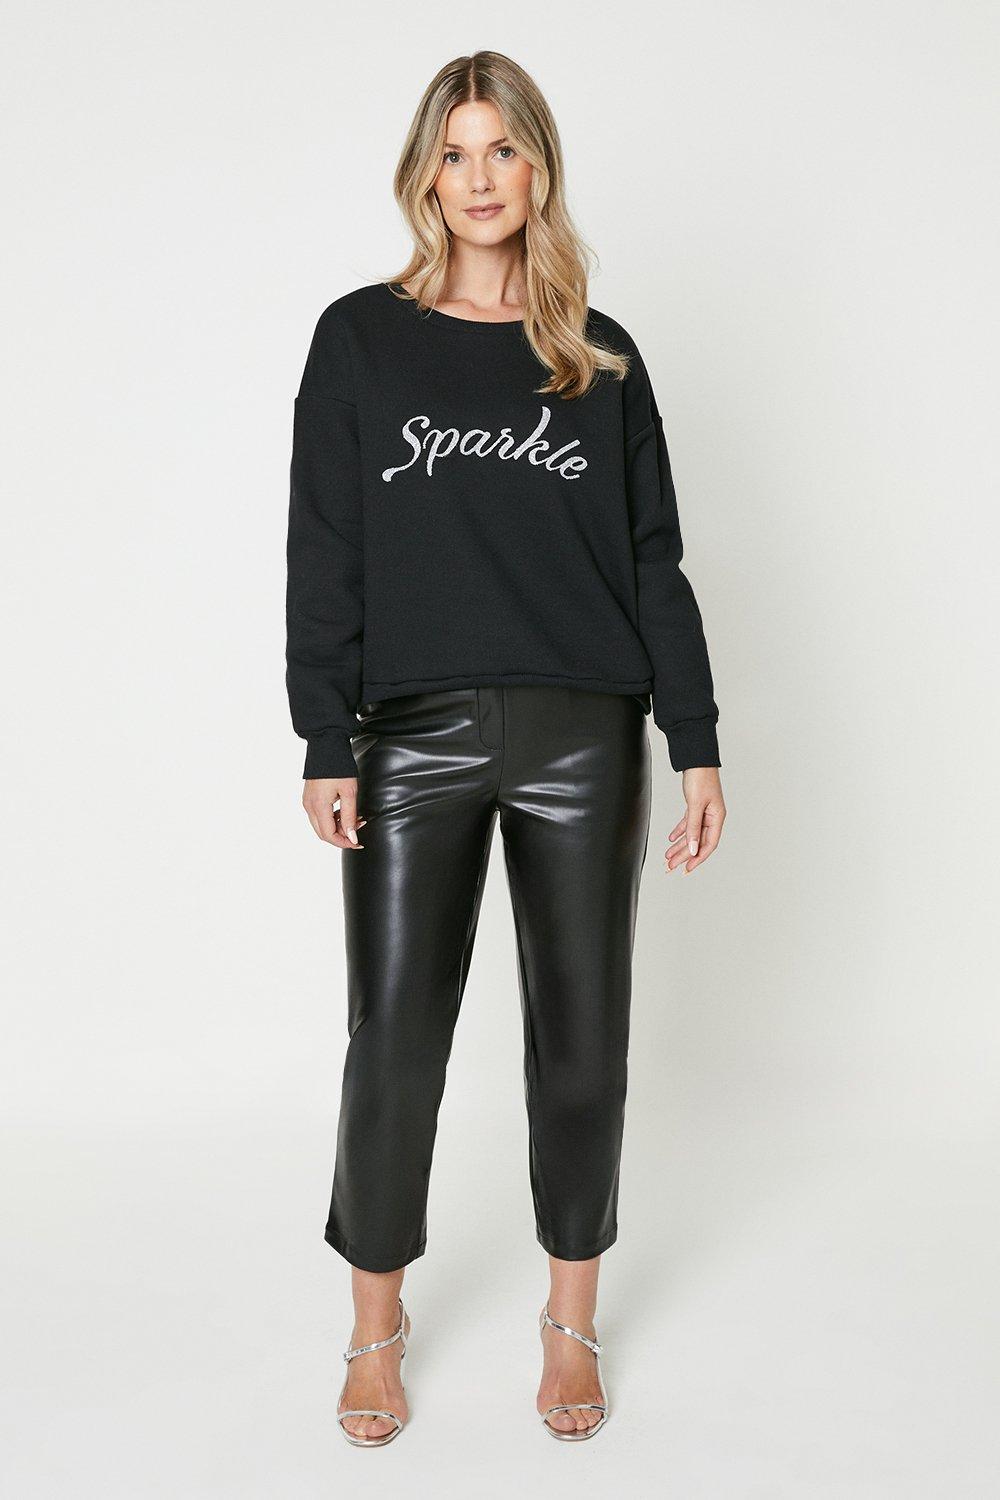 Women’s Sparkle Glitter Puff Sleeve Sweatshirt - black - L